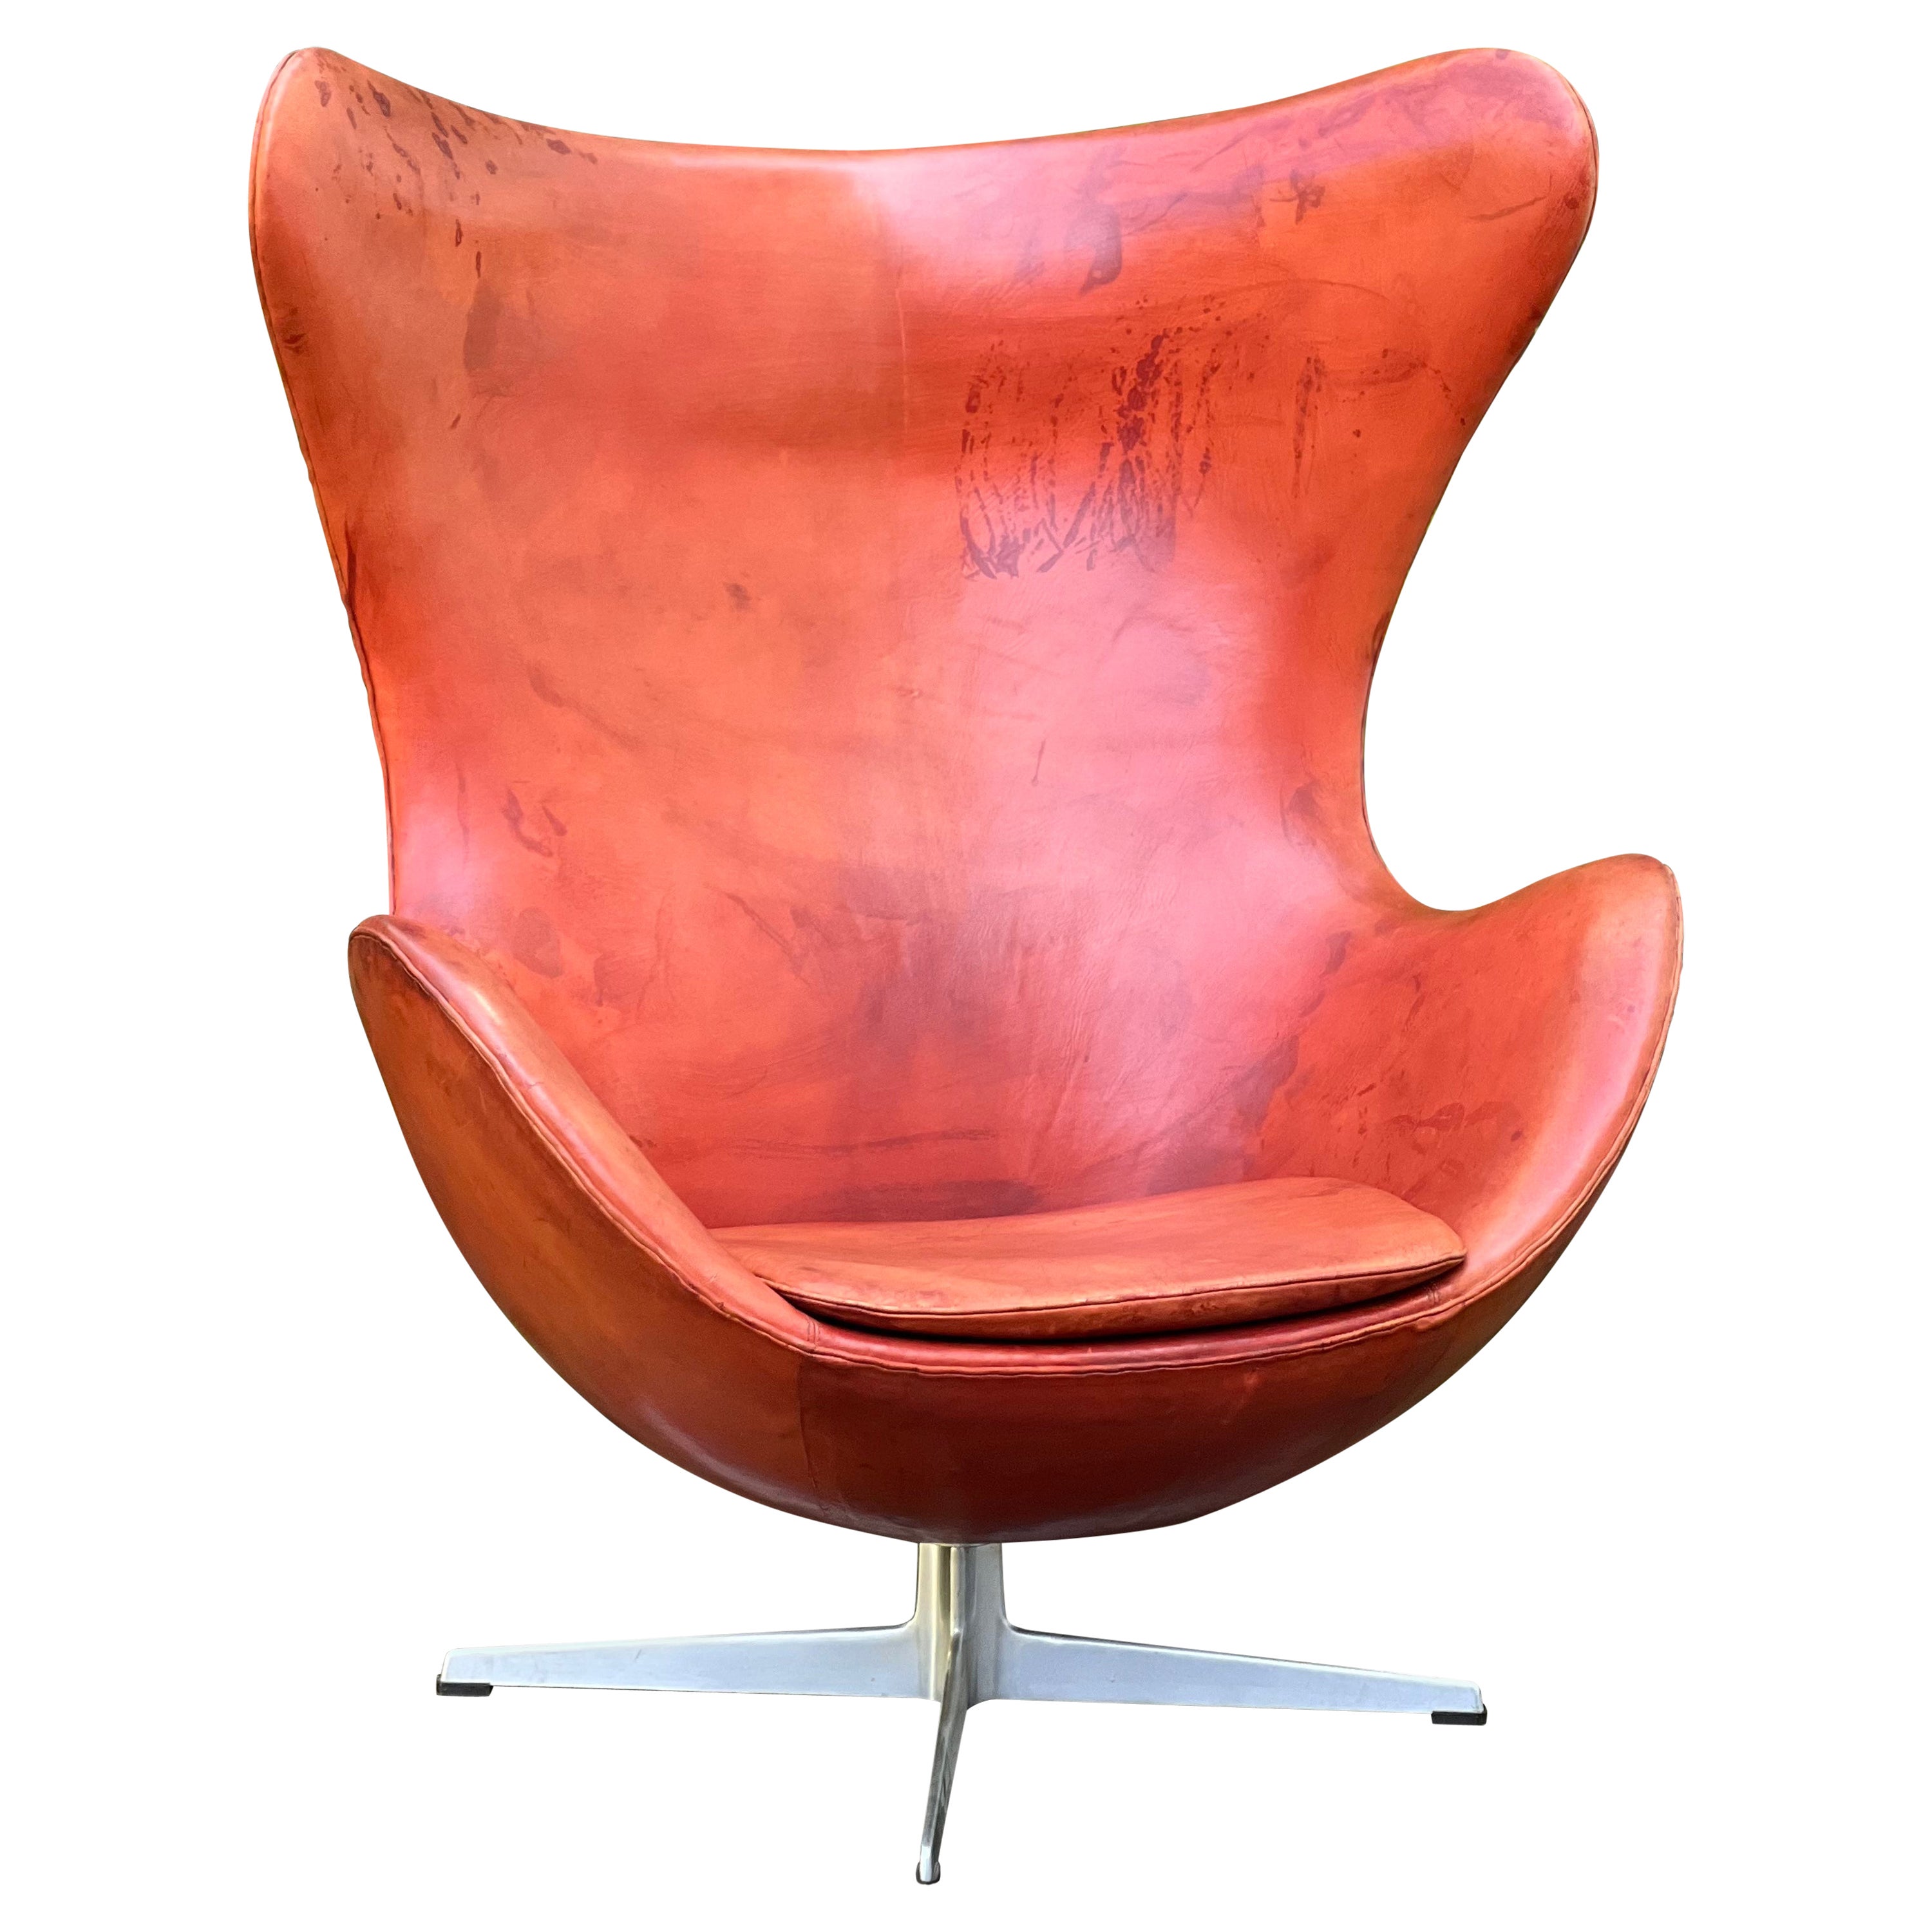 Arne Jacobsen Iconic Egg Chair Cognac Leather Early 60s Original Fritz Hansen For Sale